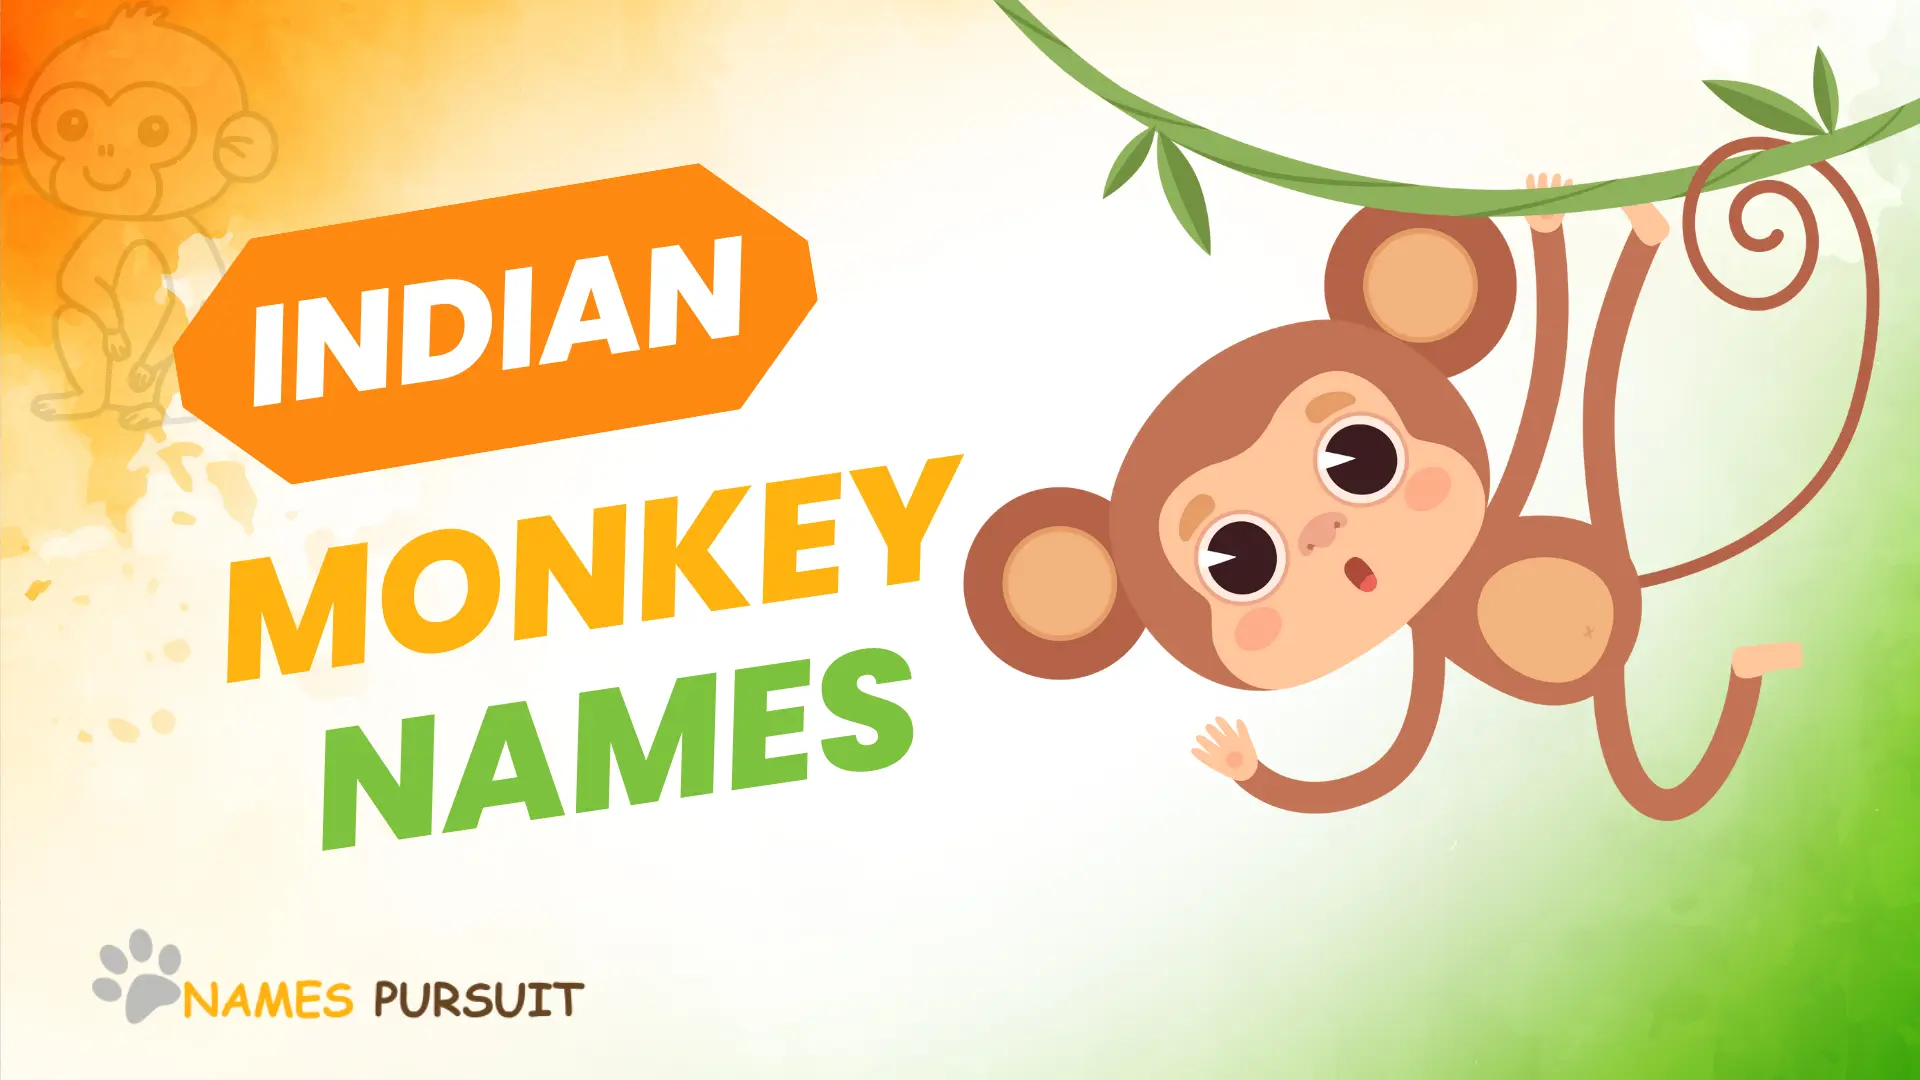 Indian Monkey Names